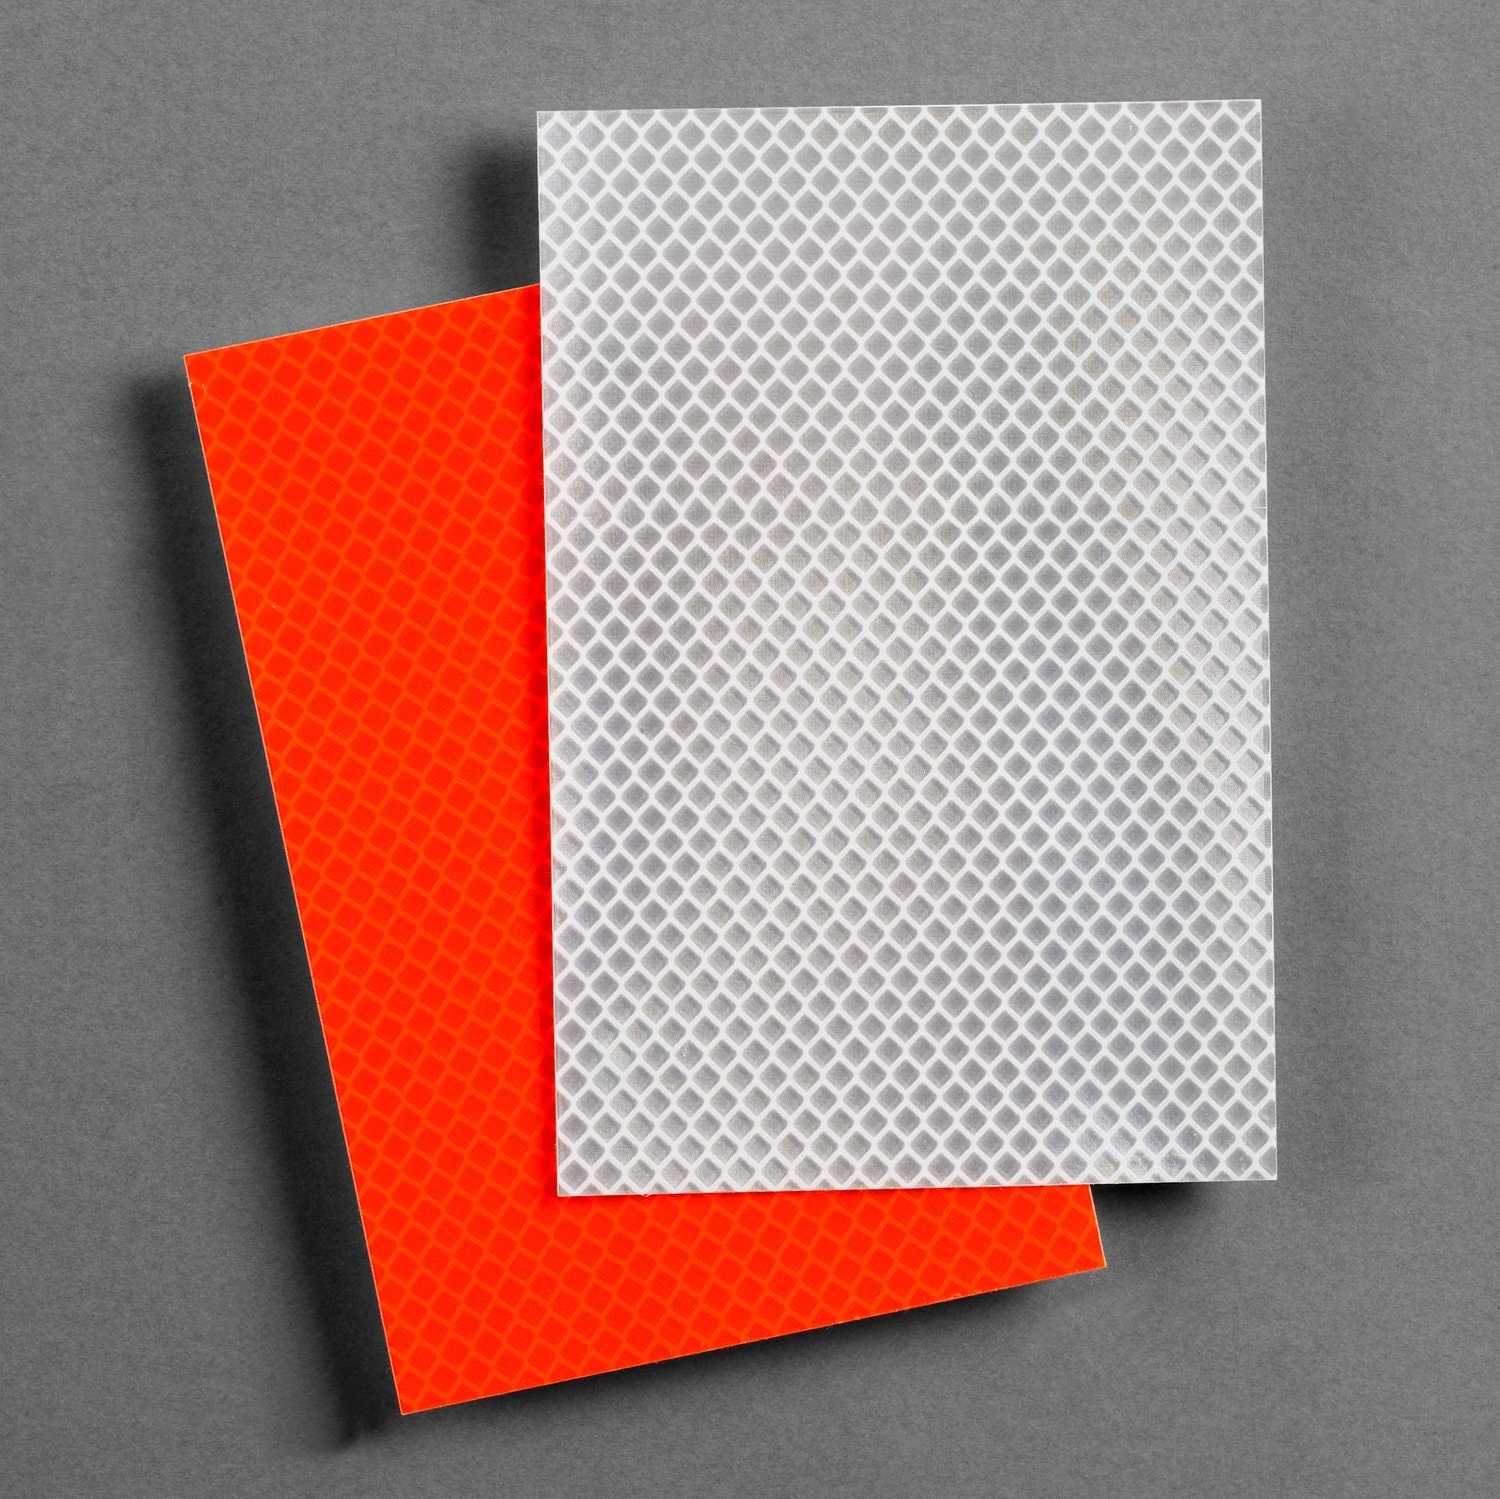 7100113248 - 3M Diamond Grade Roll-up Sign Sheeting RS24 Fluorescent Orange,
Configurable sheet